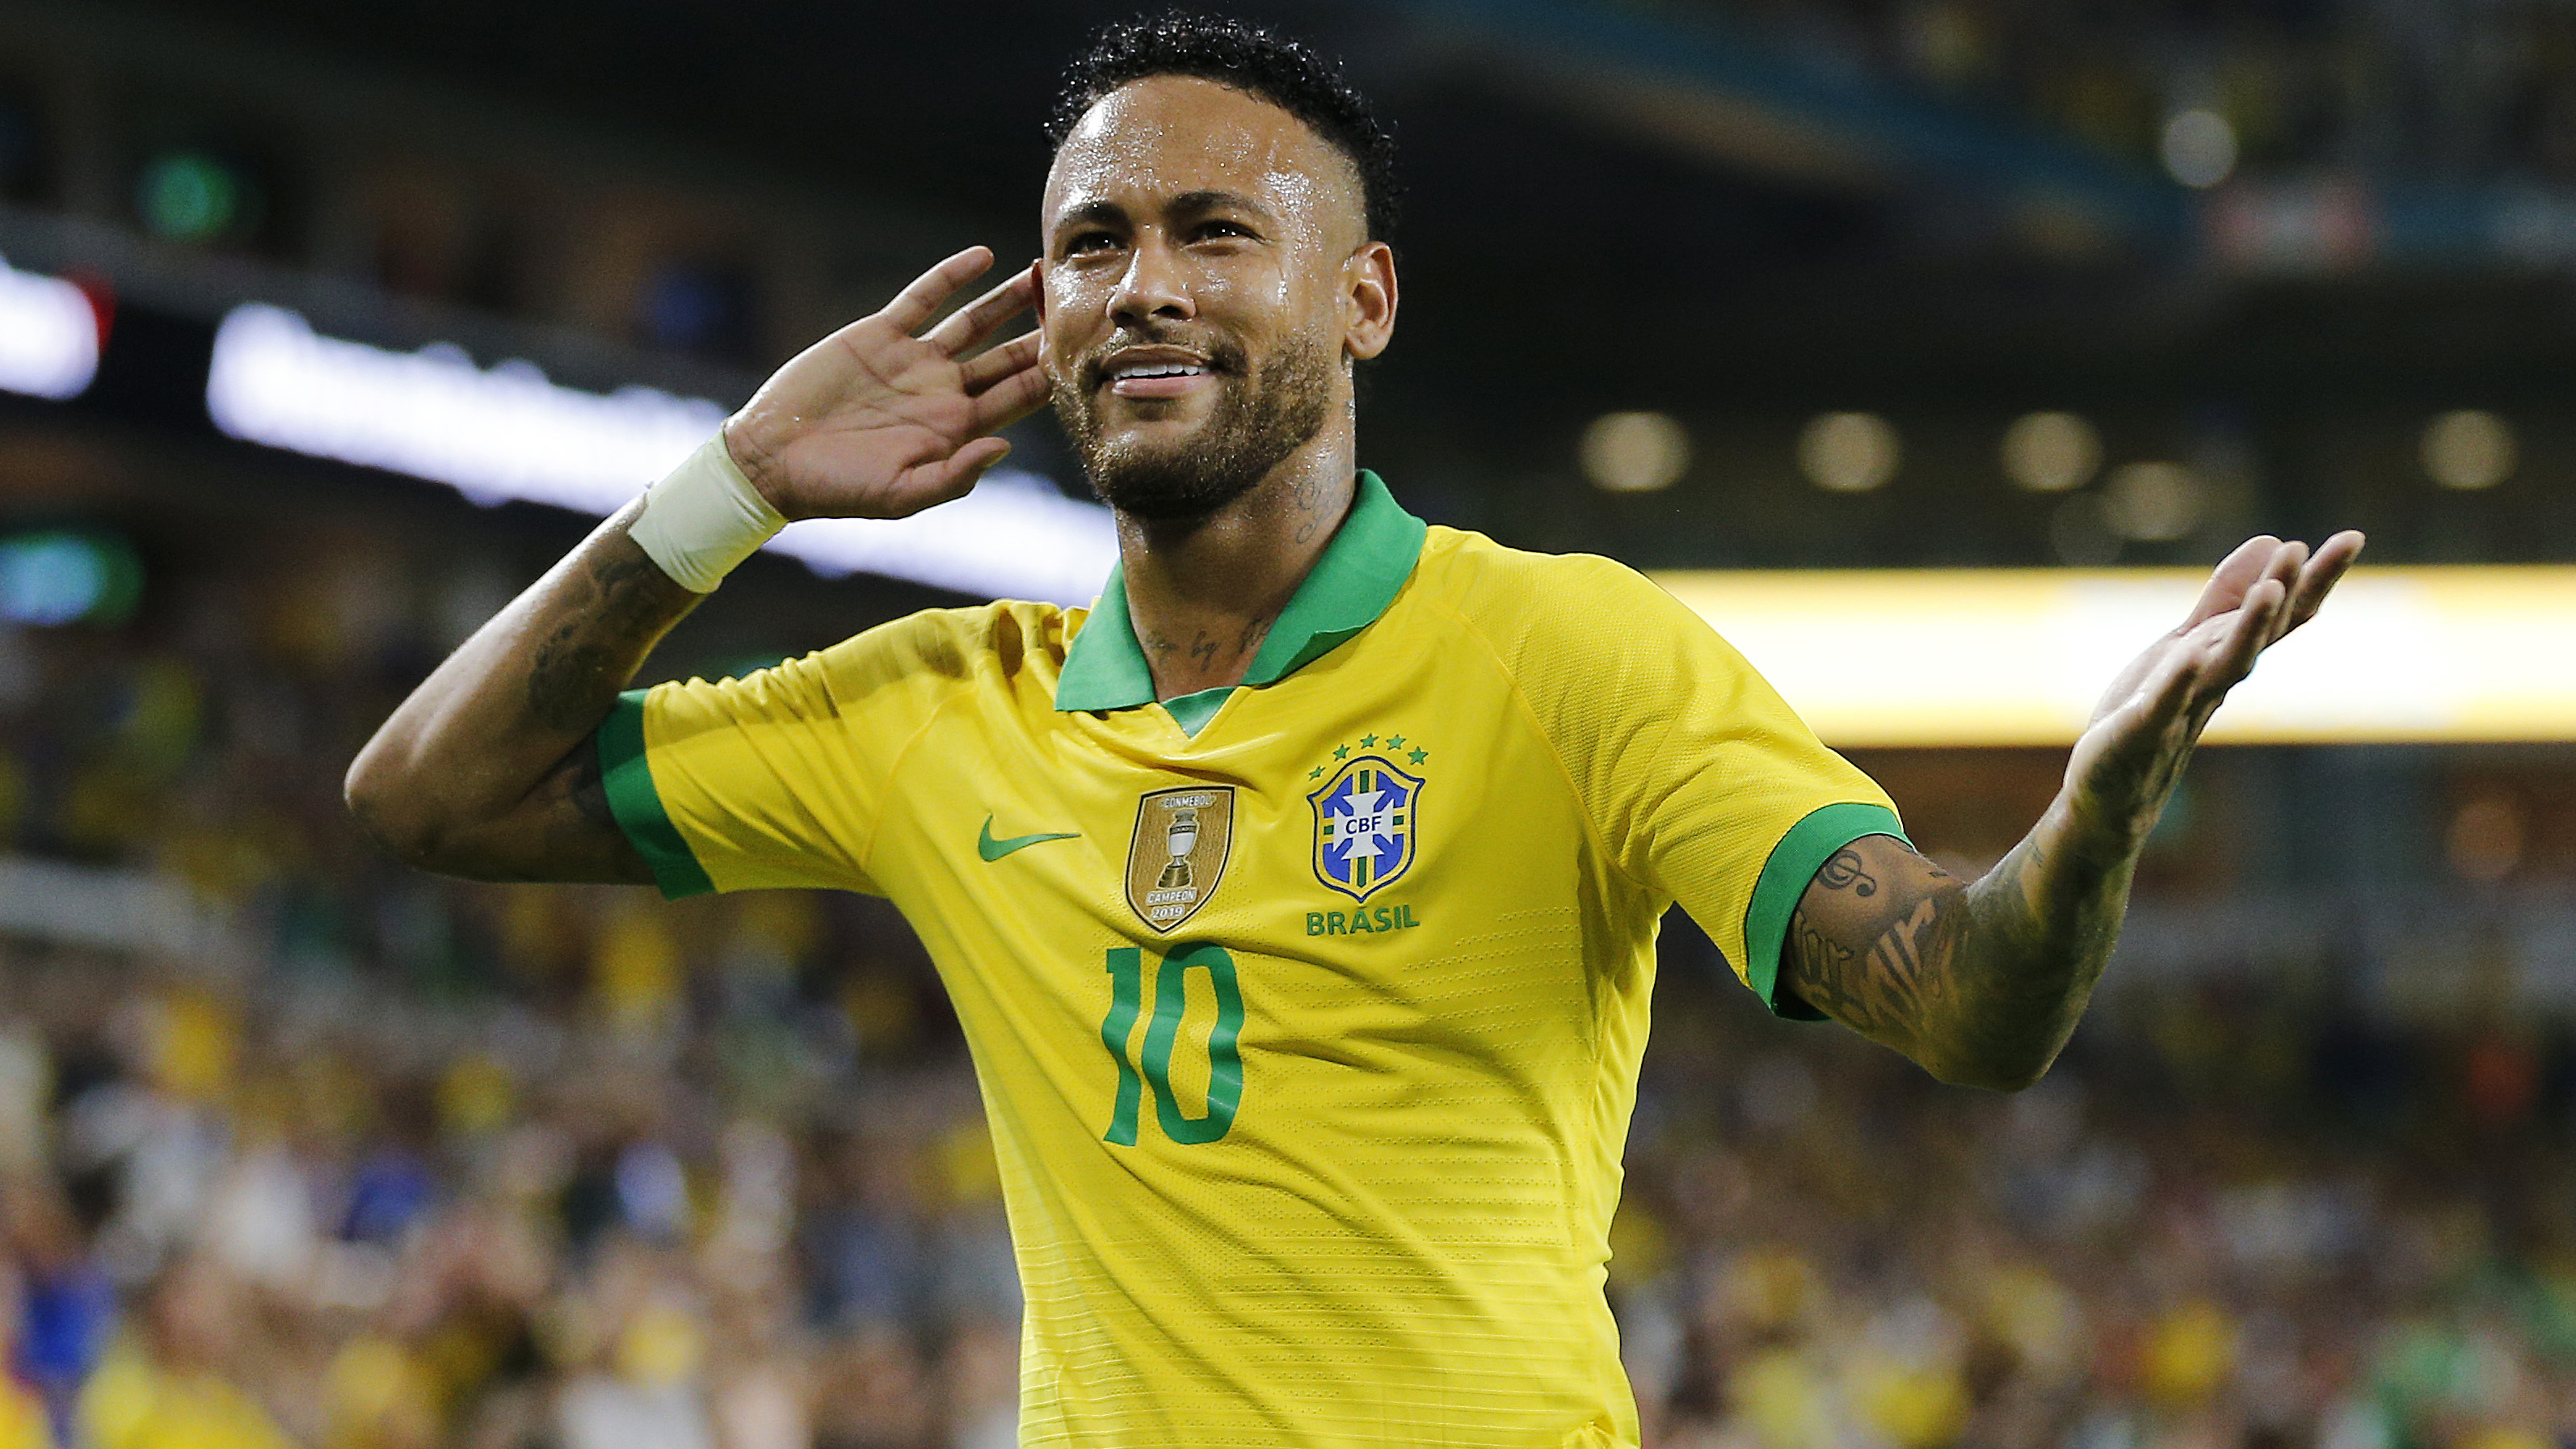 Neymar celebrates after a goal for Brazil